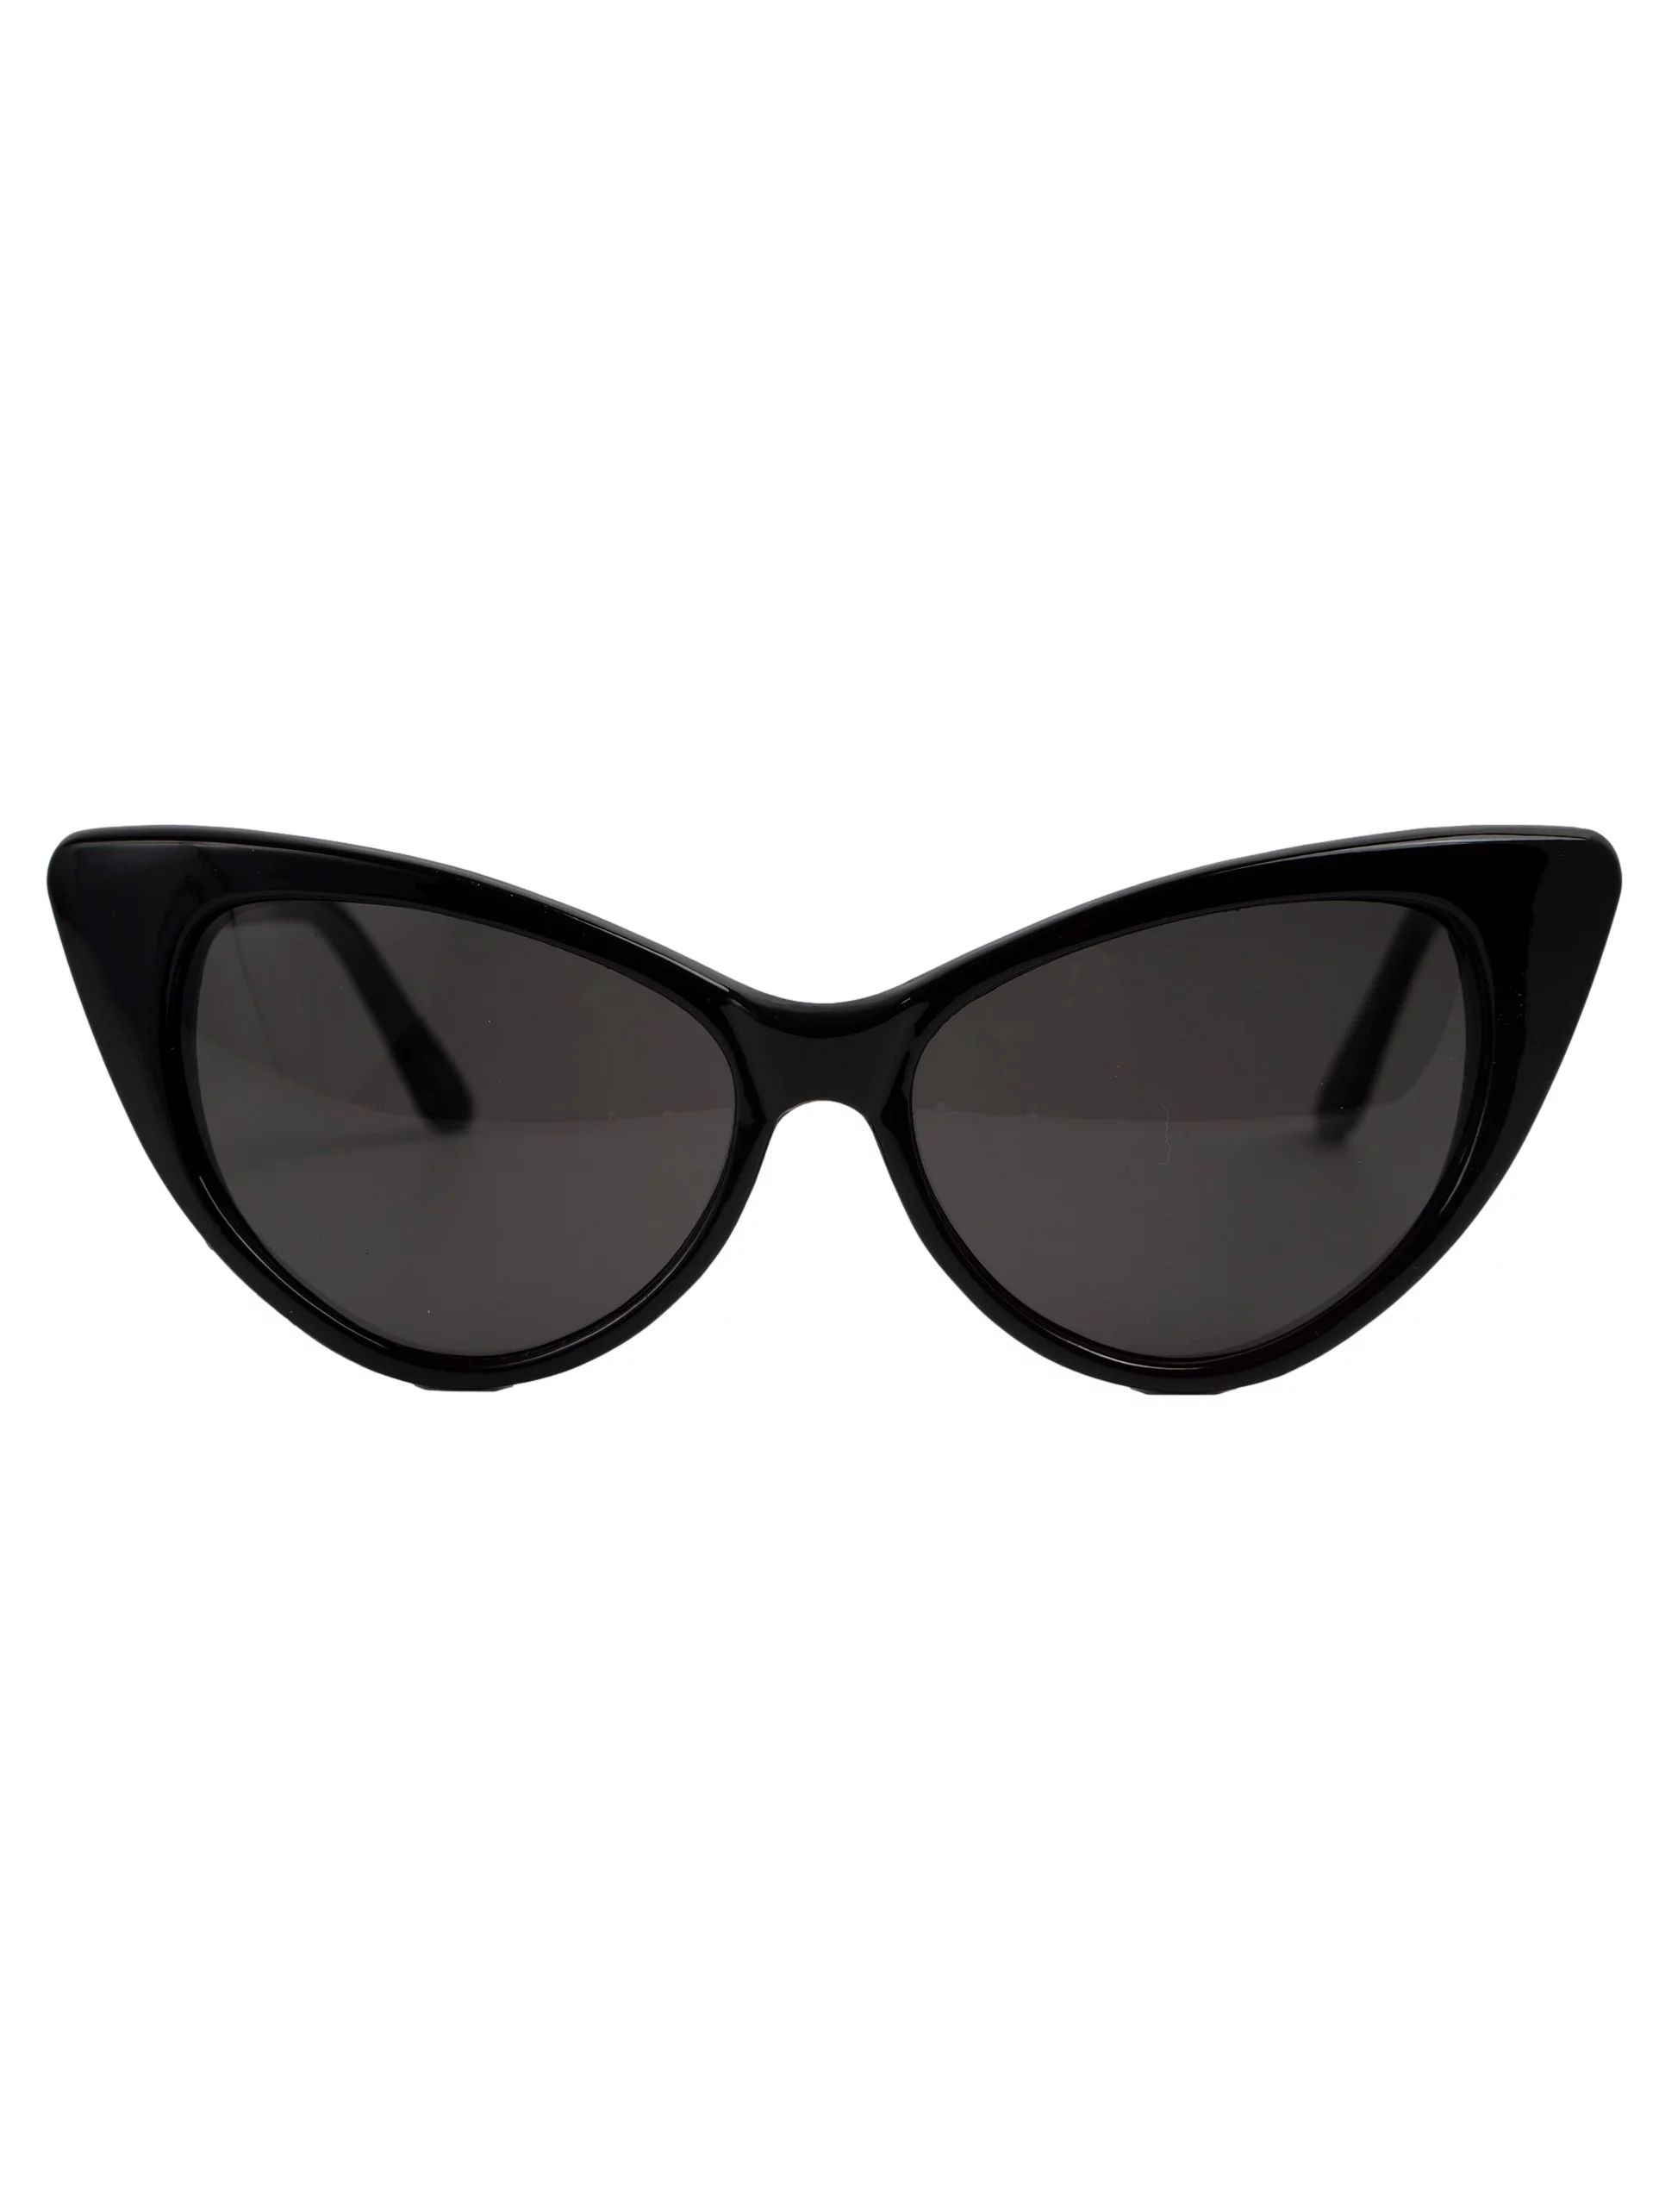 Women's Medium Size Classic Cat Eye Sunglasses, Black | Walmart (US)